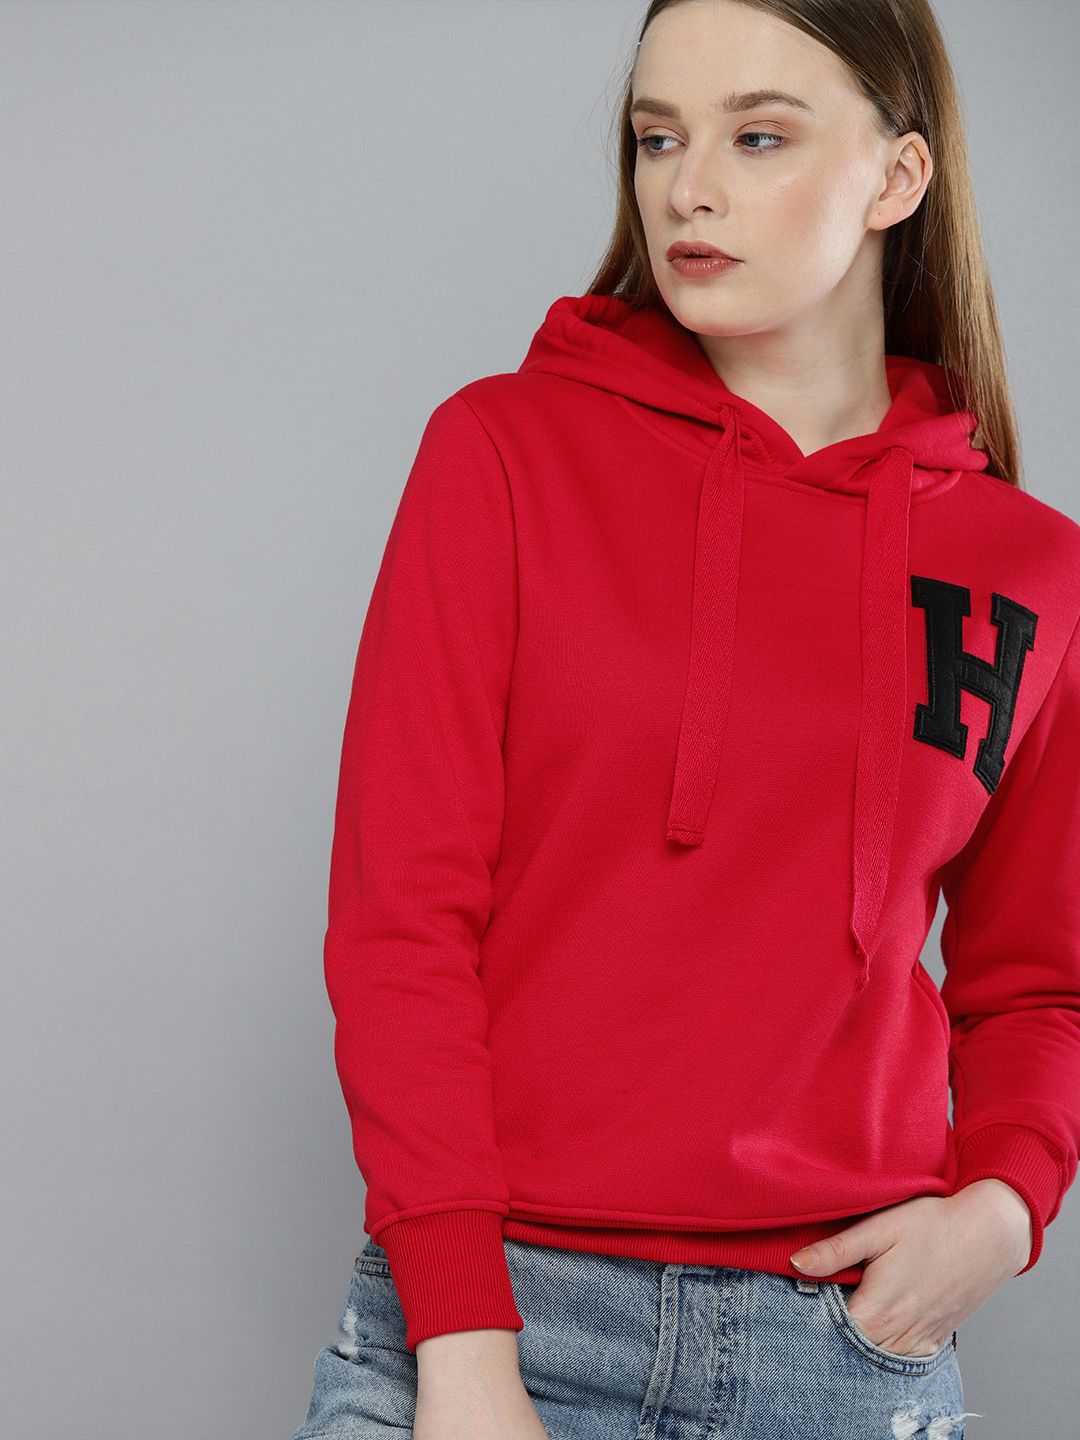 Harvard Women Red Solid Hooded Pullover Sweatshirt Price in India